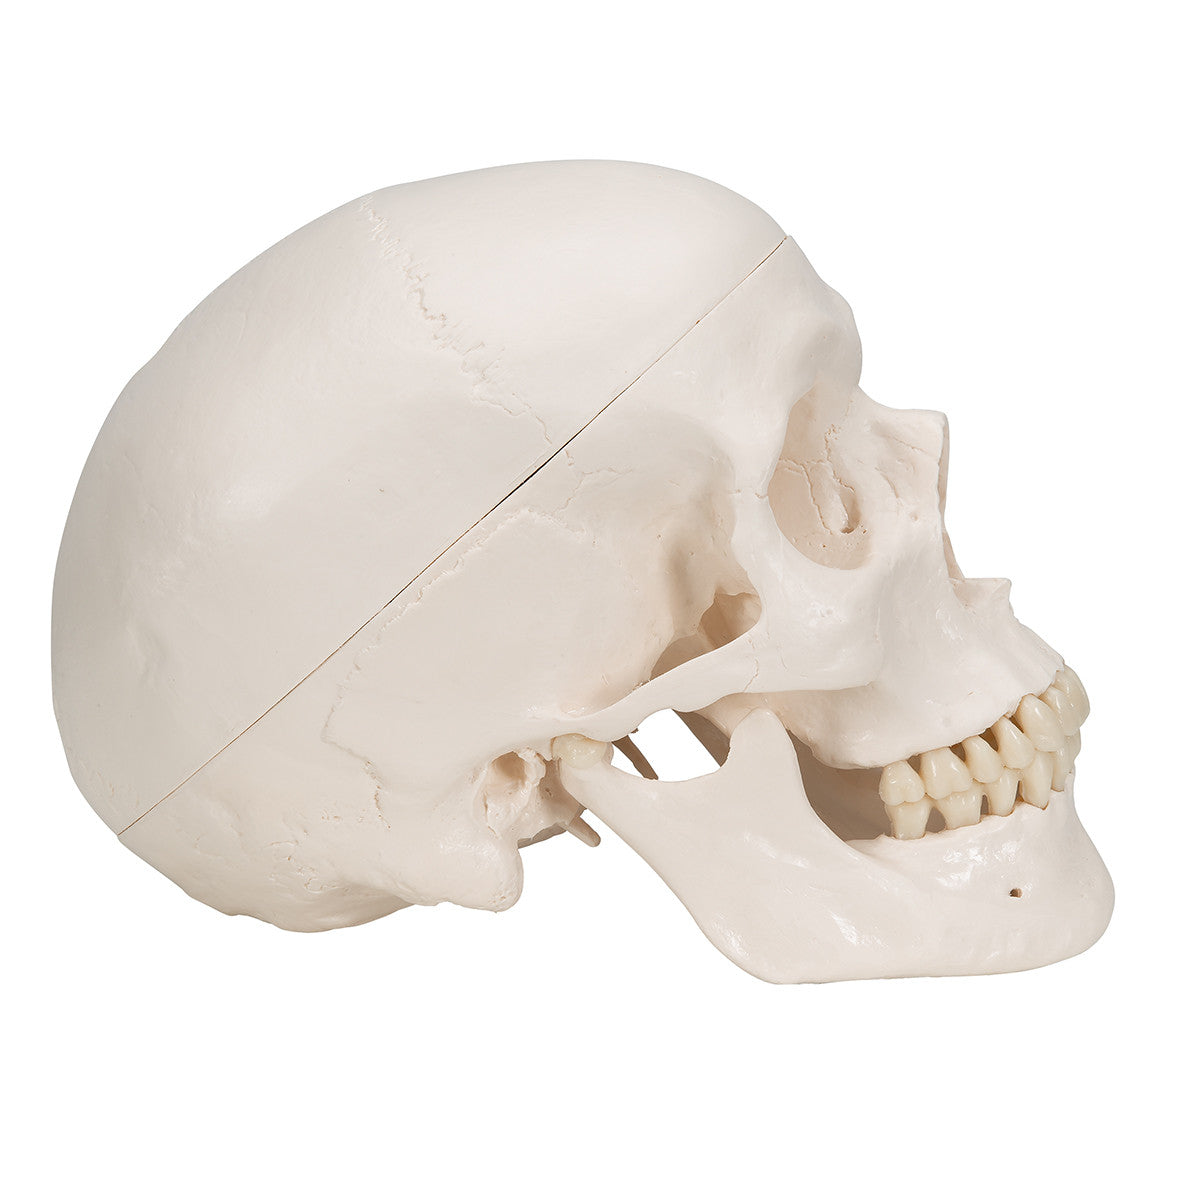 Classic Human Skull Model with 5 part Brain | 3B Scientific A20/9